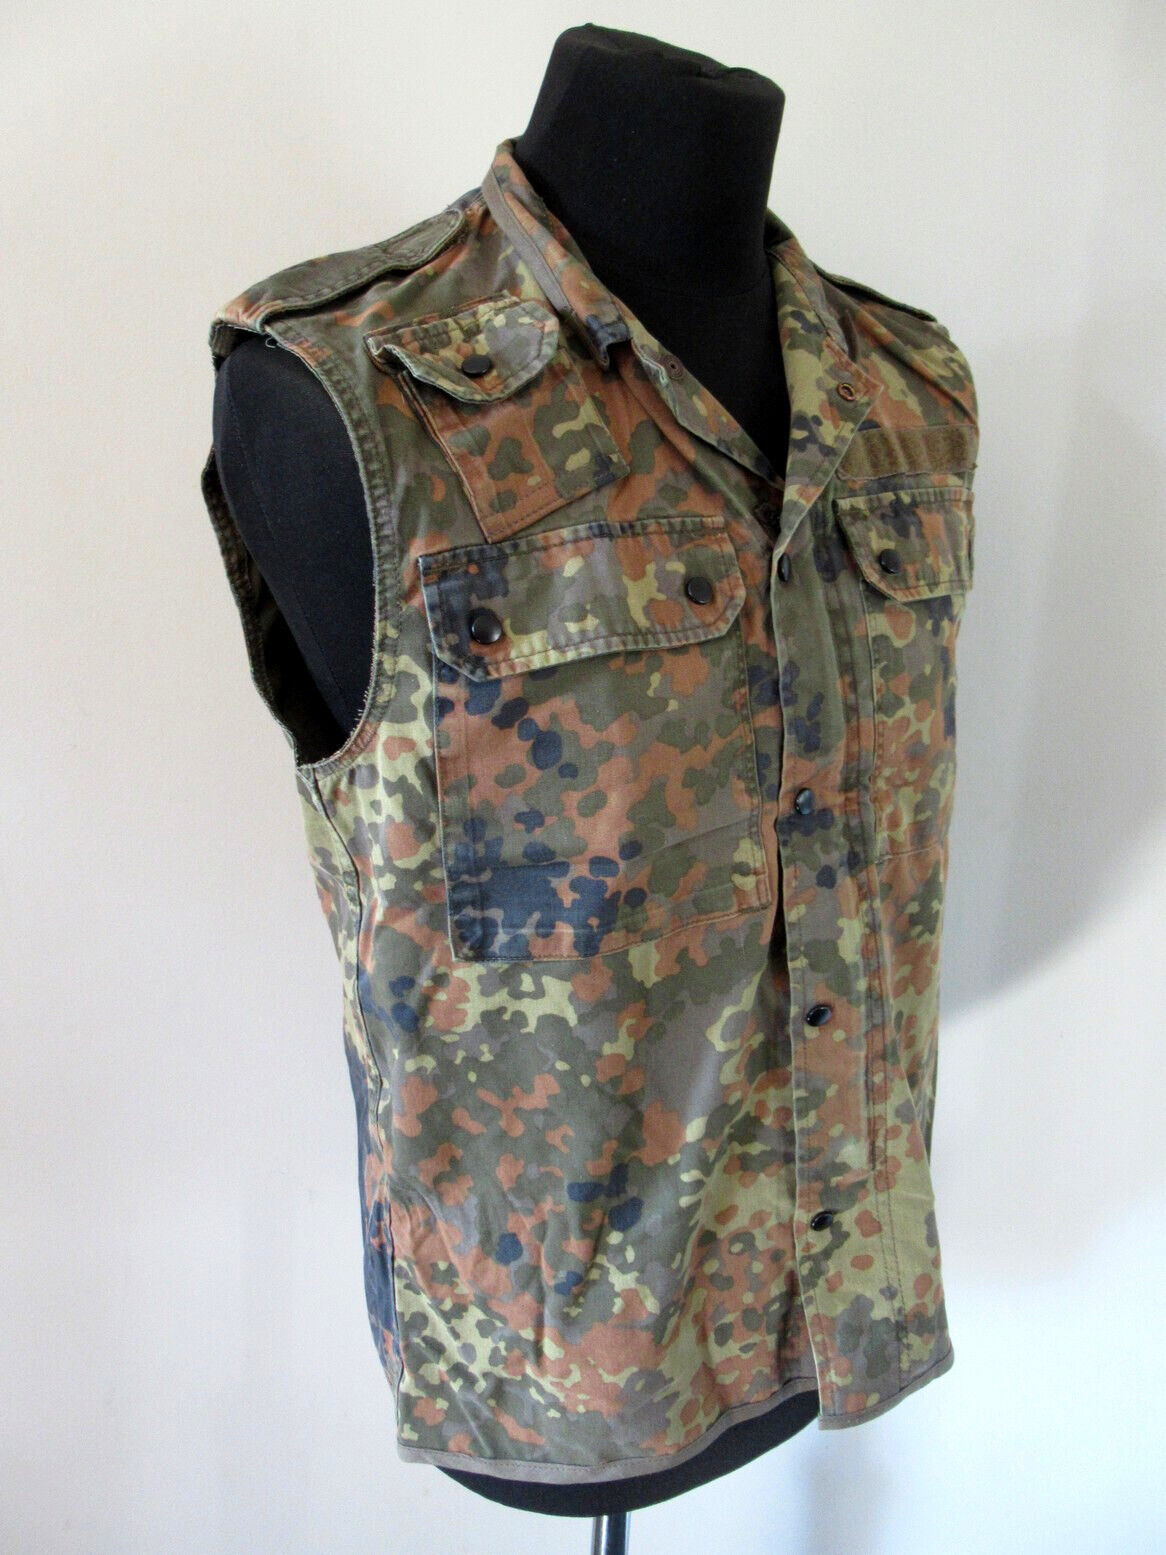 Vintage German army camo vest sleeveless shirt fieldshirt military GAO gilet